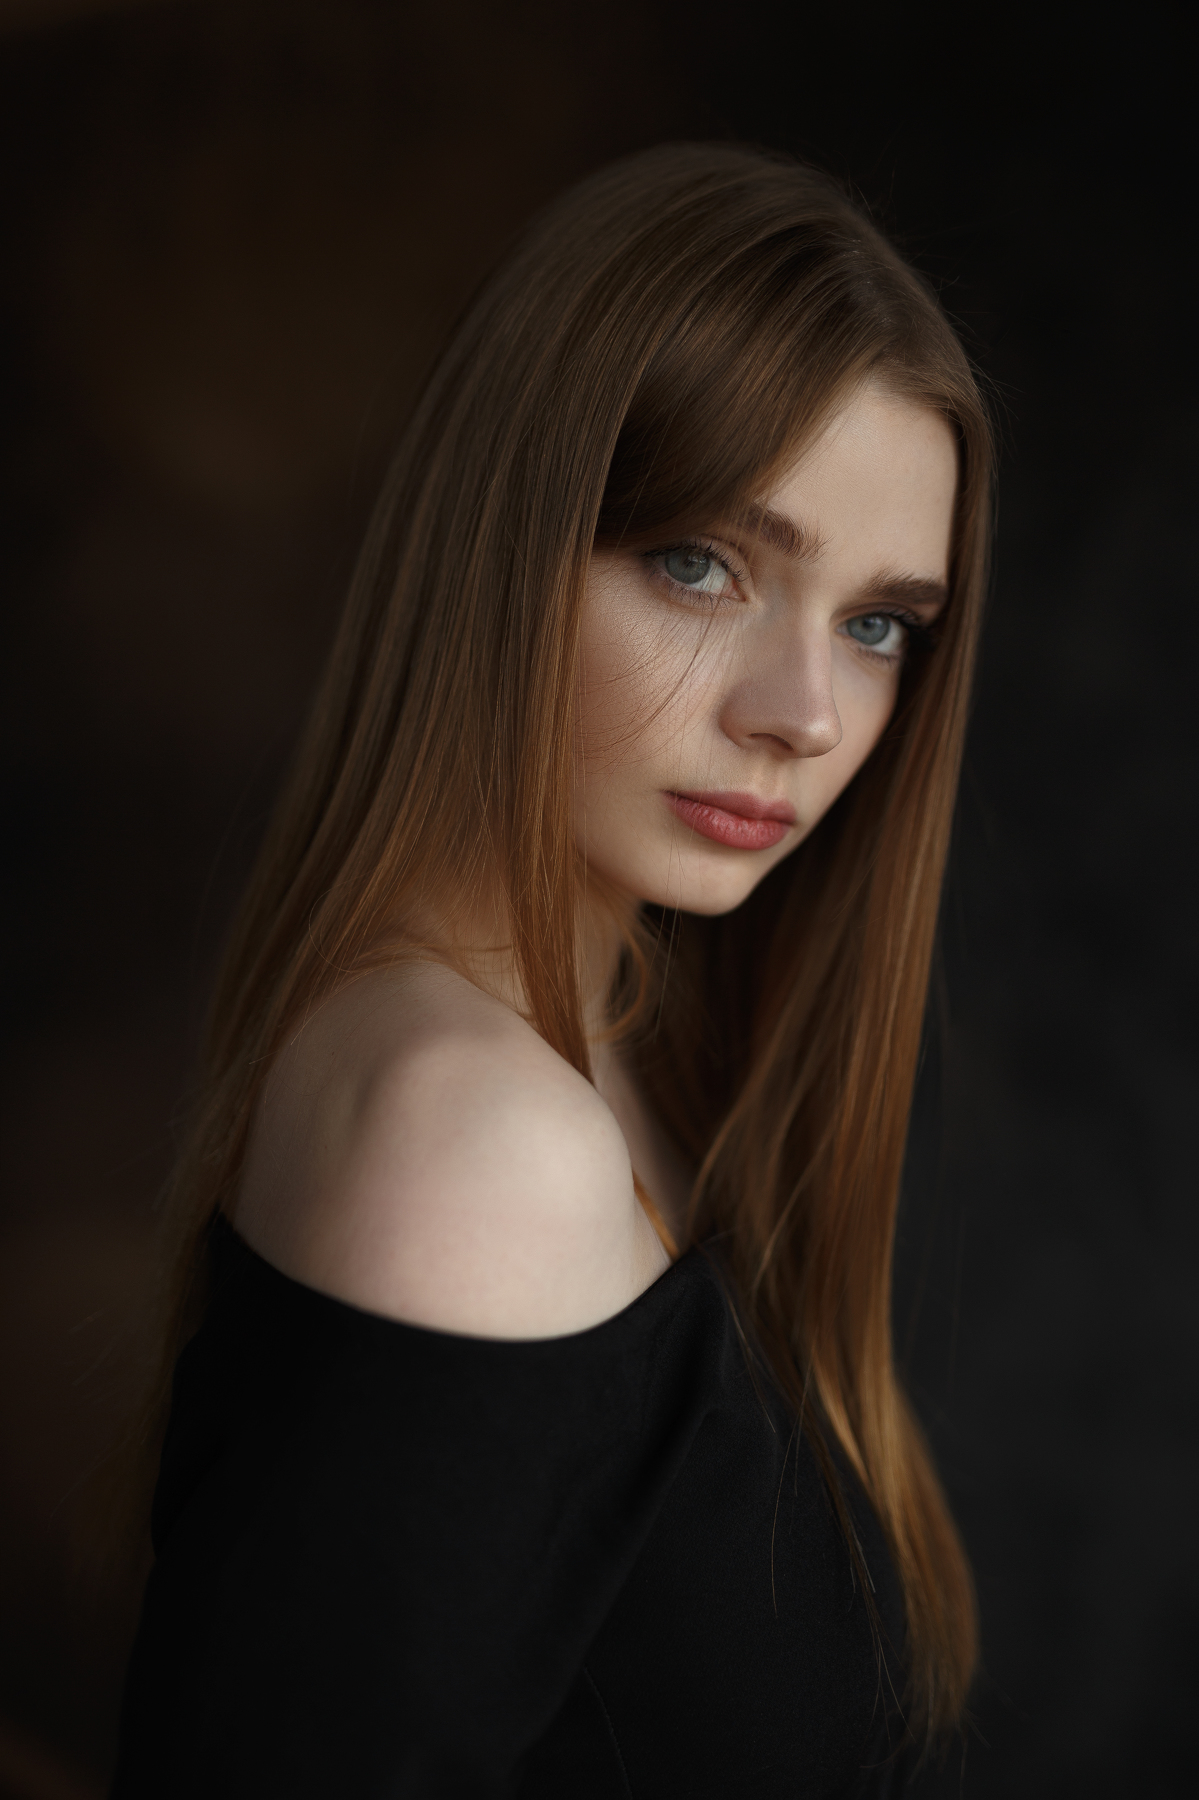 Ivan Losev Brunette Portrait Display Women Simple Background Model Blue Eyes Looking At Viewer Bare  1199x1800